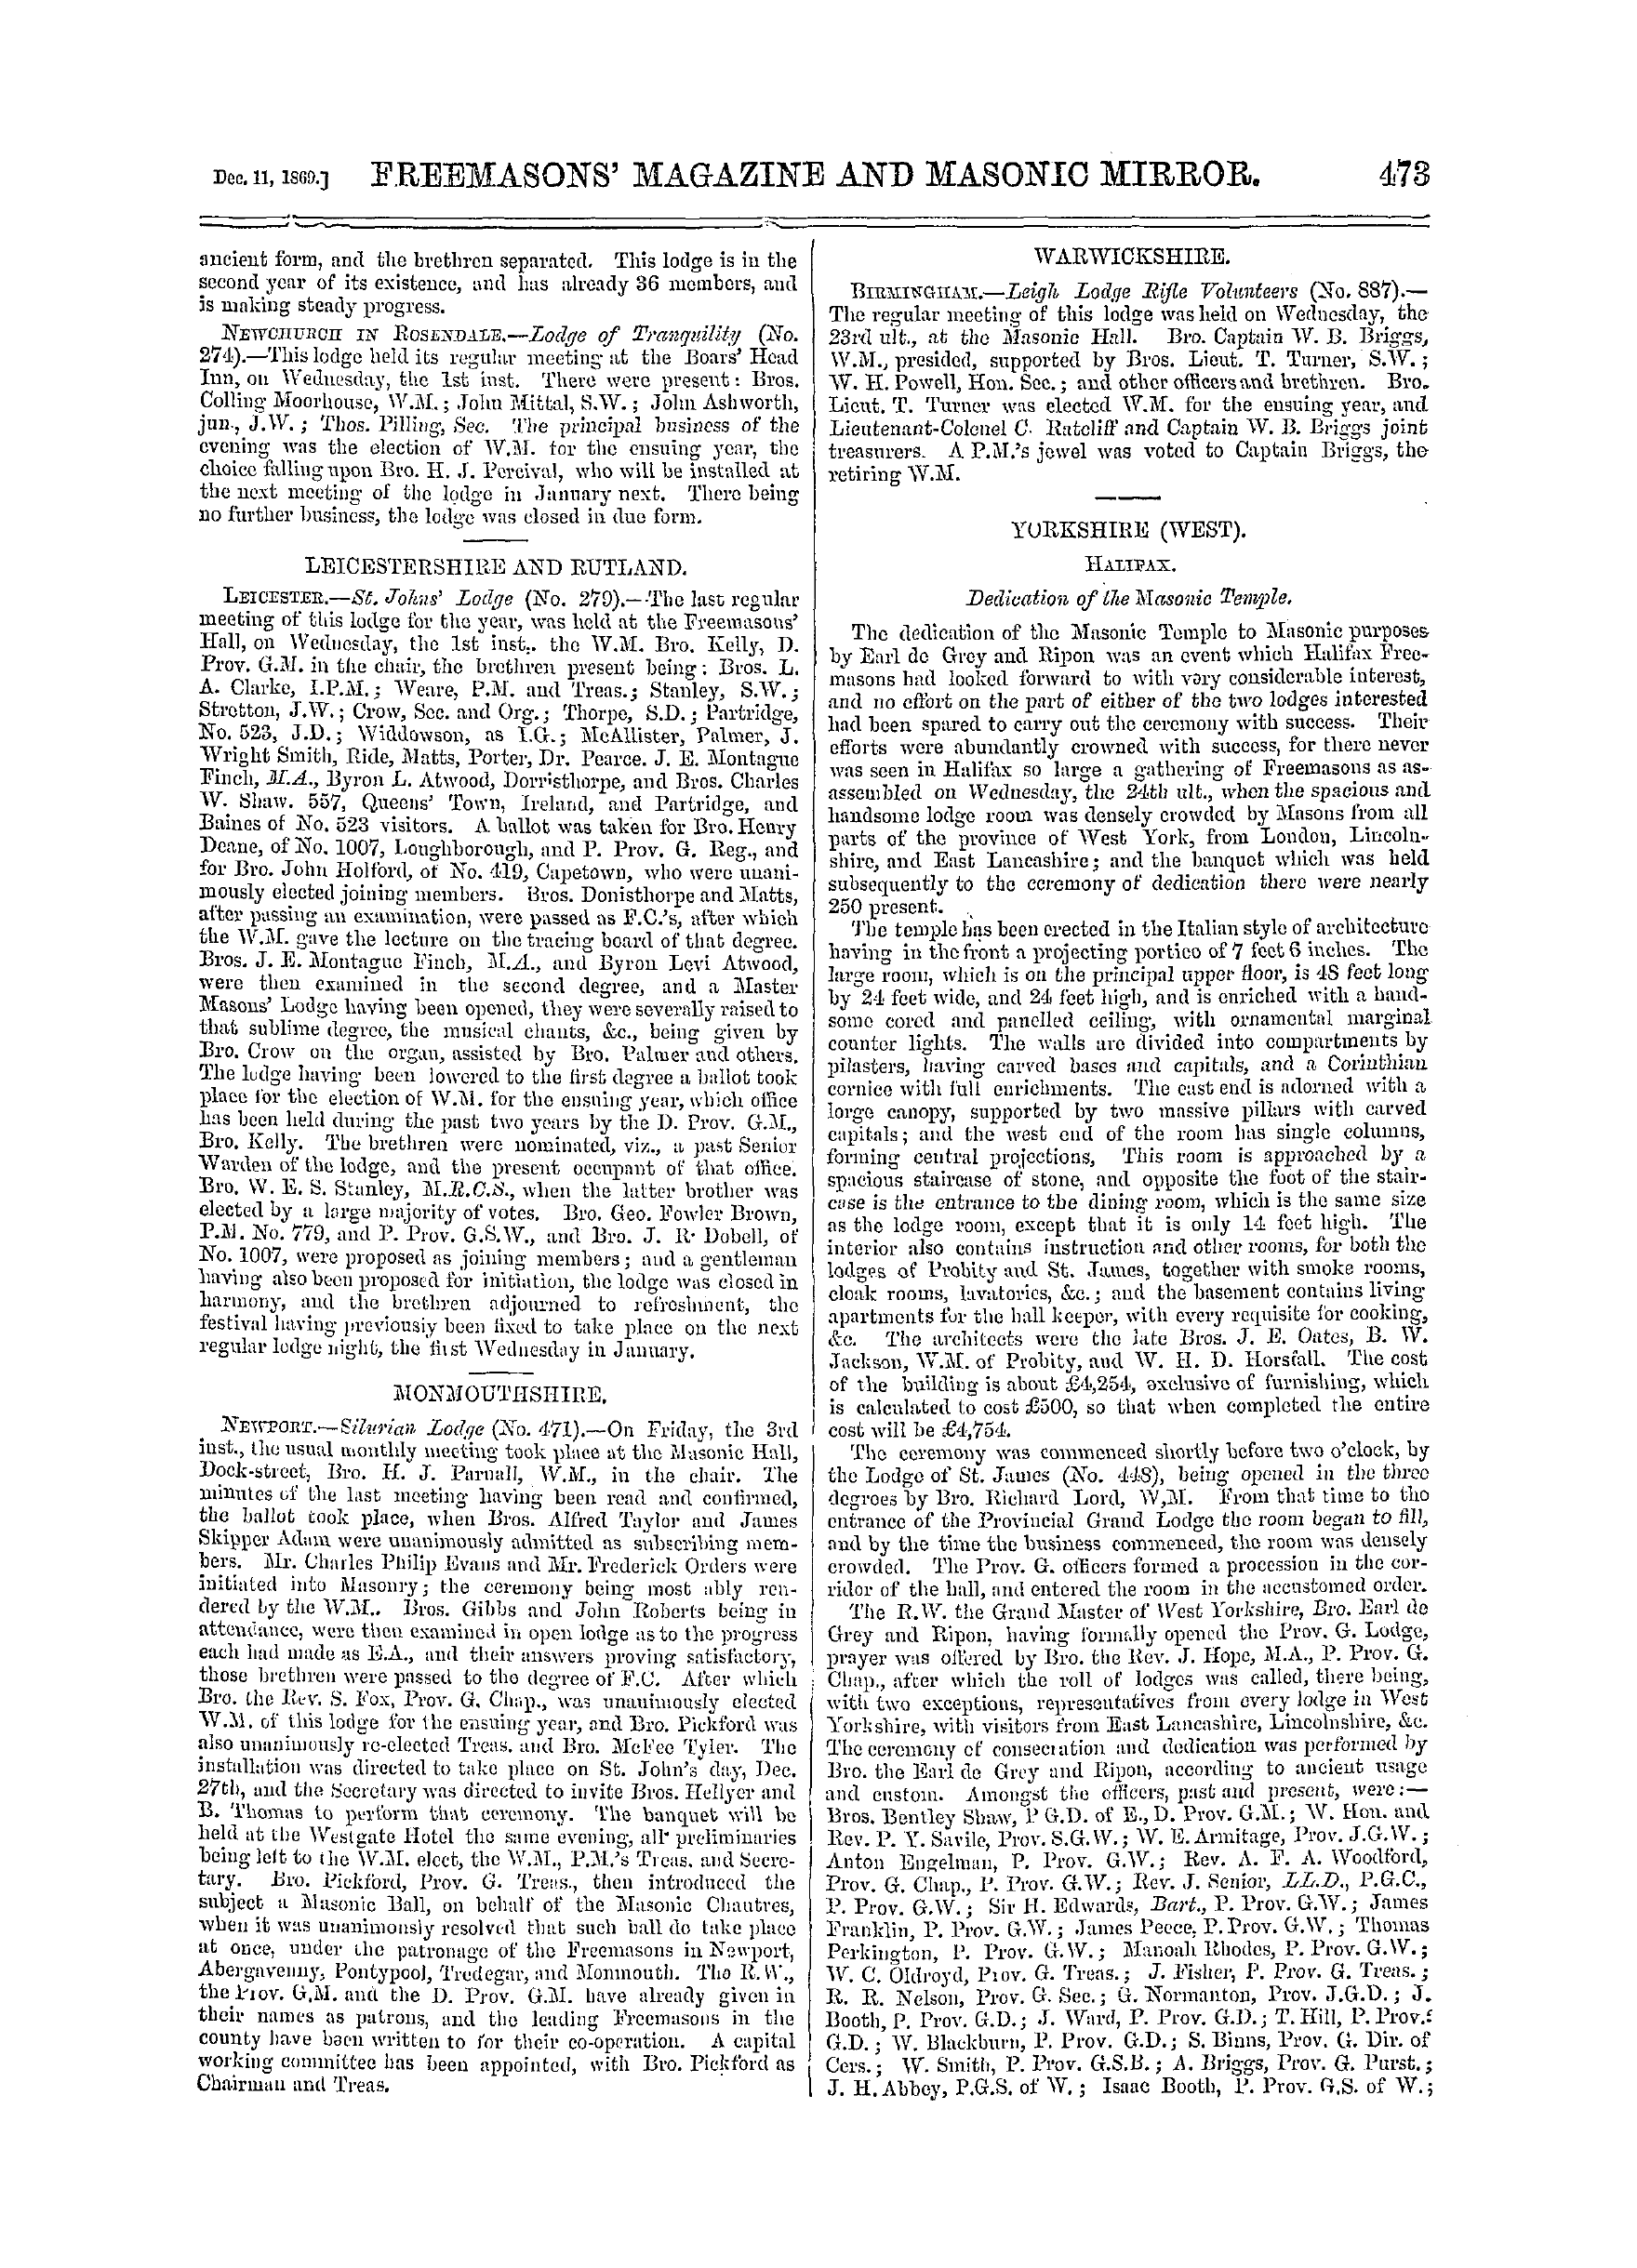 The Freemasons' Monthly Magazine: 1869-12-11 - Provincial.